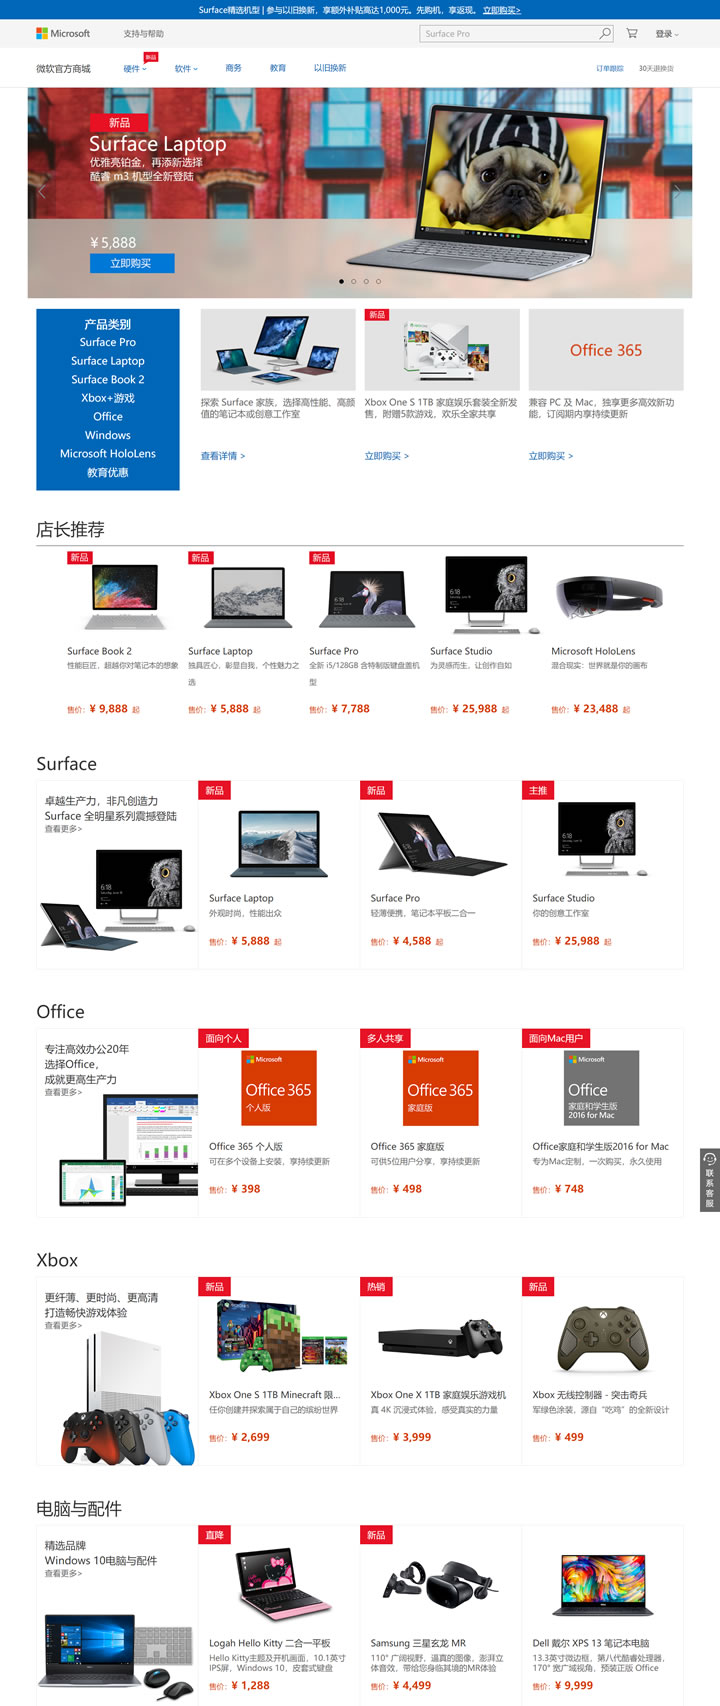 Microsoft Store China Site: Microsoftstore.com.cn